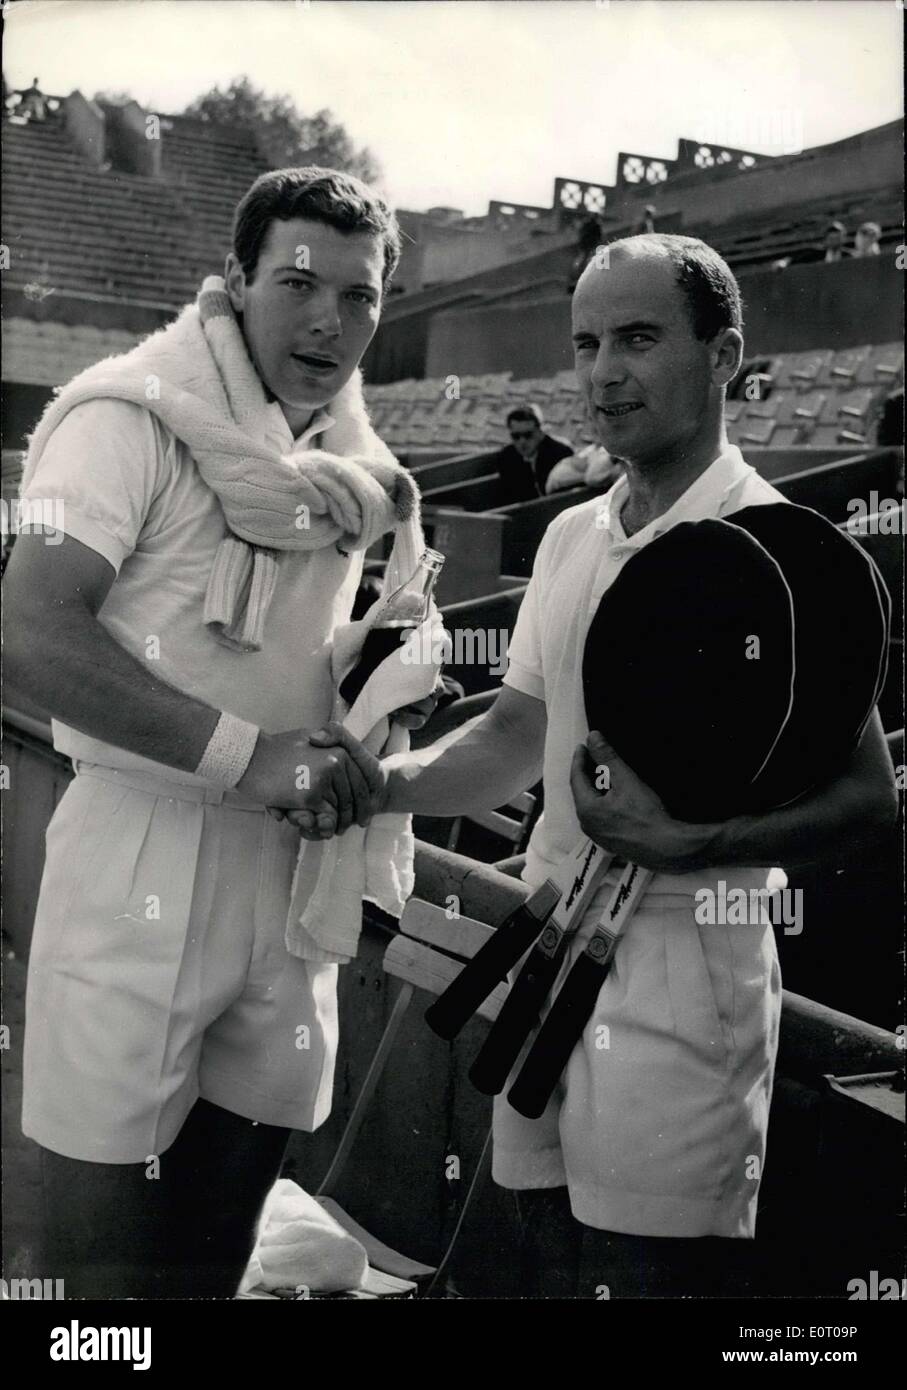 May 21, 1960 - Nicola Pietrangeli Beats Gerard Pilet in French Open Semi-Final ESS. Stock Photo